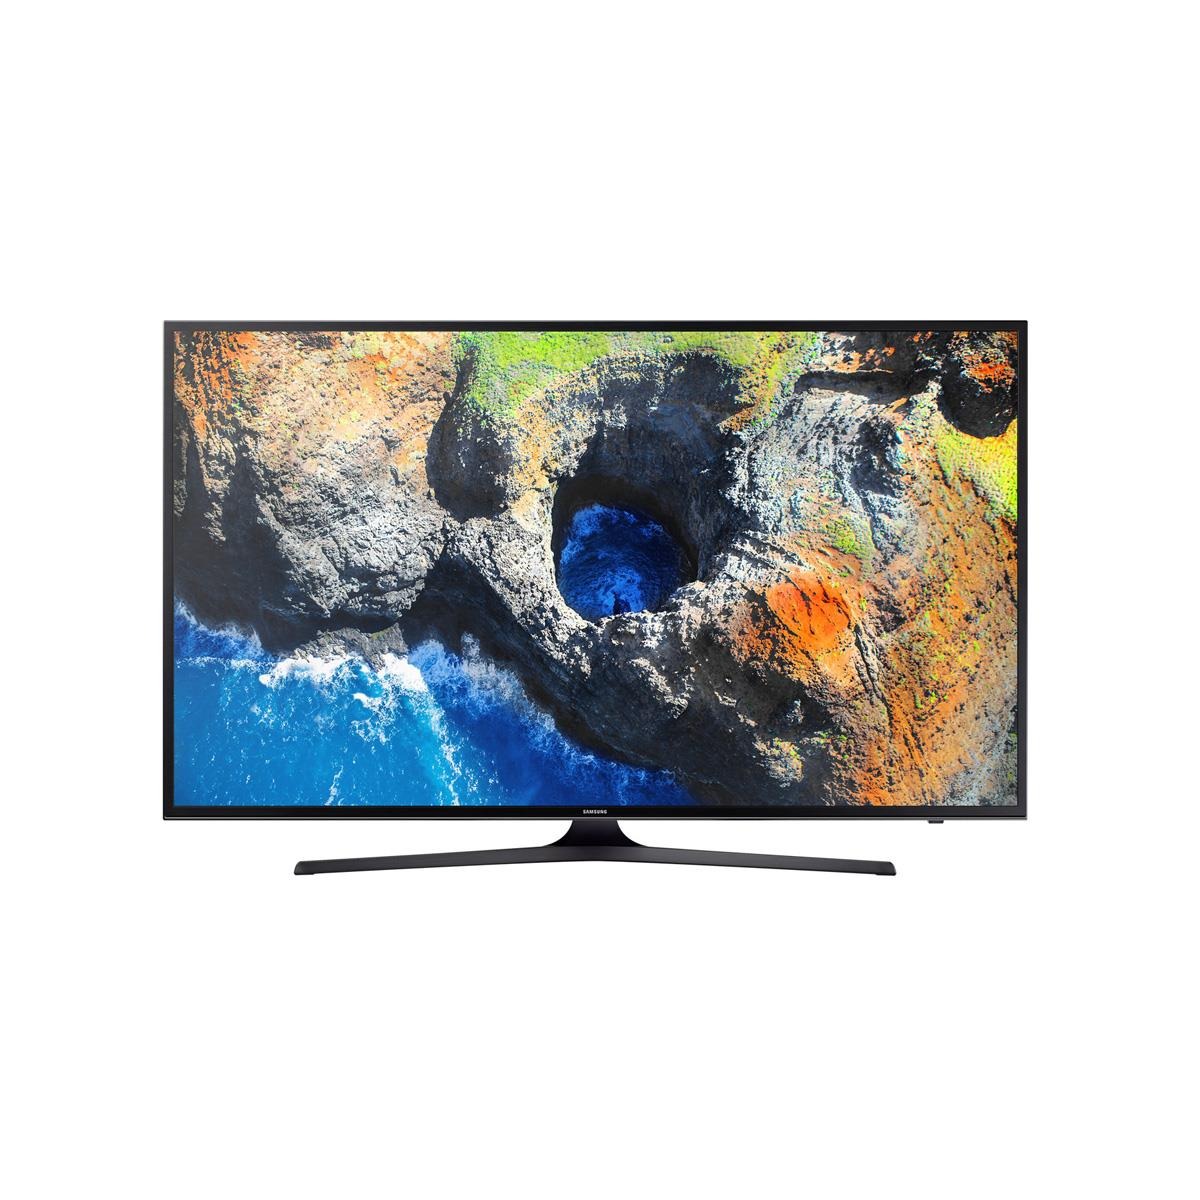 SMART TV LED 40' Samsung 4K, RGB, UHD,HDR Premium,Quad Core, UHD Diming, c/ Conversor Digital, 3 HDMI 2 USB, Wifi Integrado, 20W, 120hz-UN40MU6100GXZD